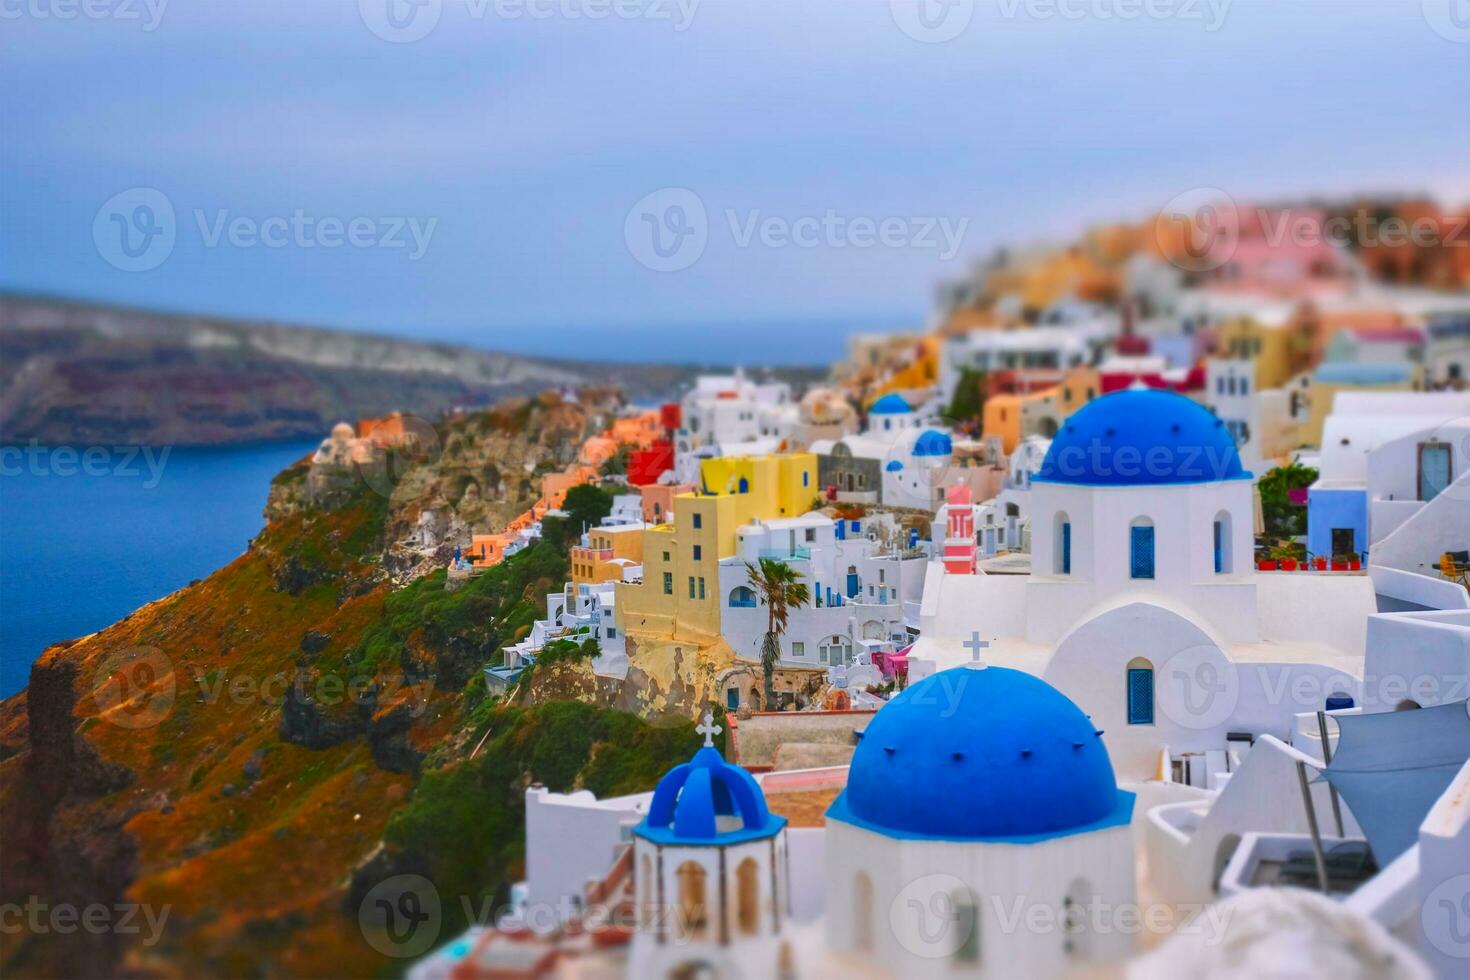 famoso griego turista destino oye, Grecia foto